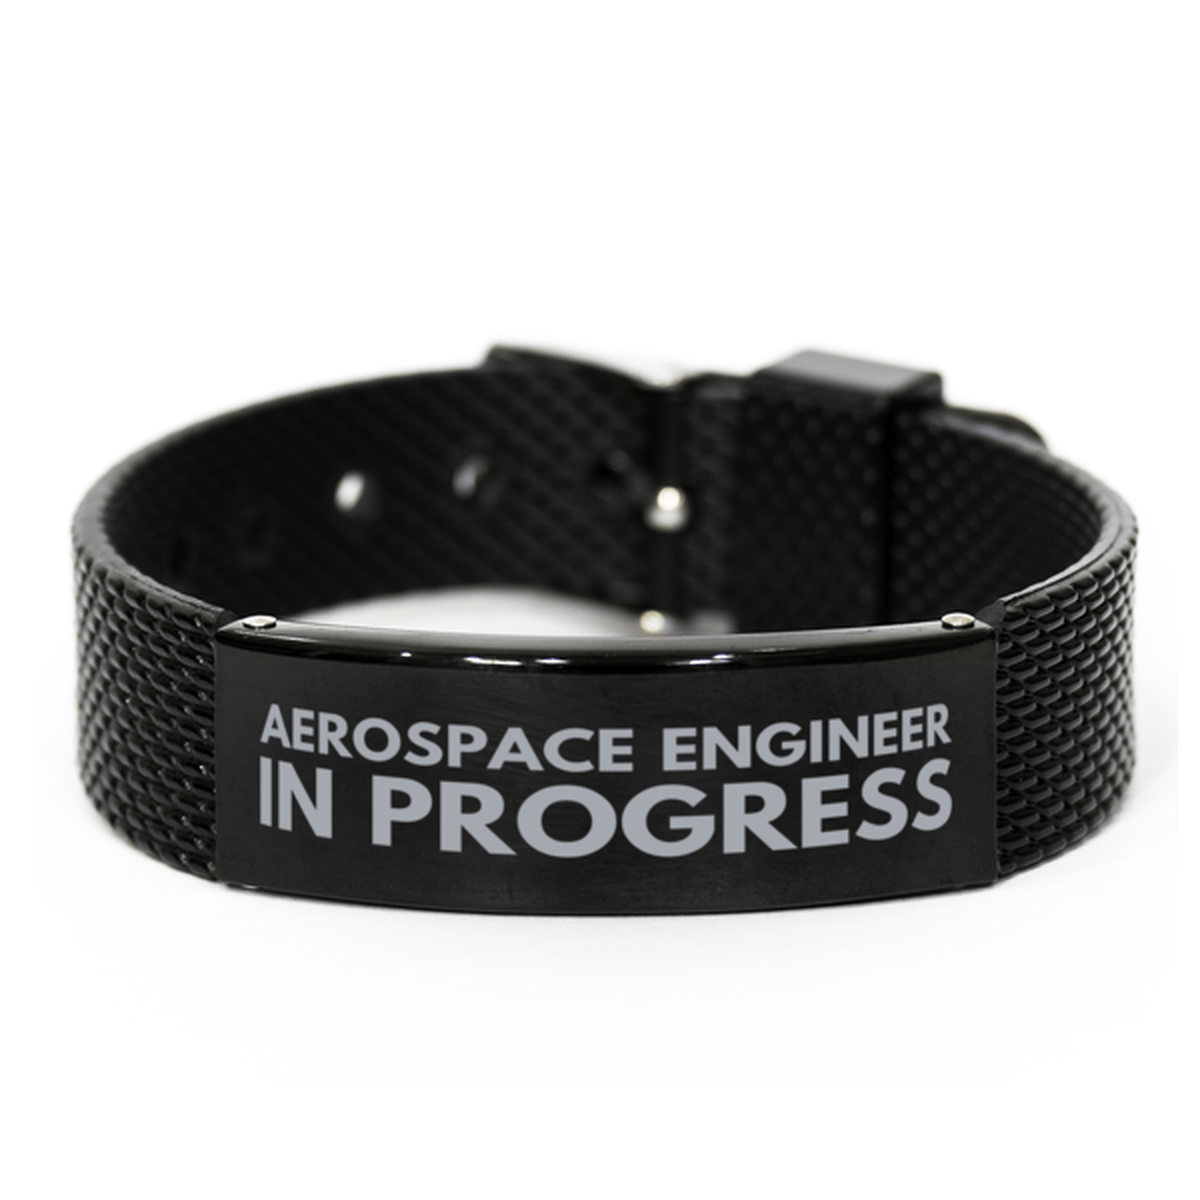 Inspirational Aerospace Engineer Black Shark Mesh Bracelet, Aerospace Engineer In Progress, Best Graduation Gifts for Students